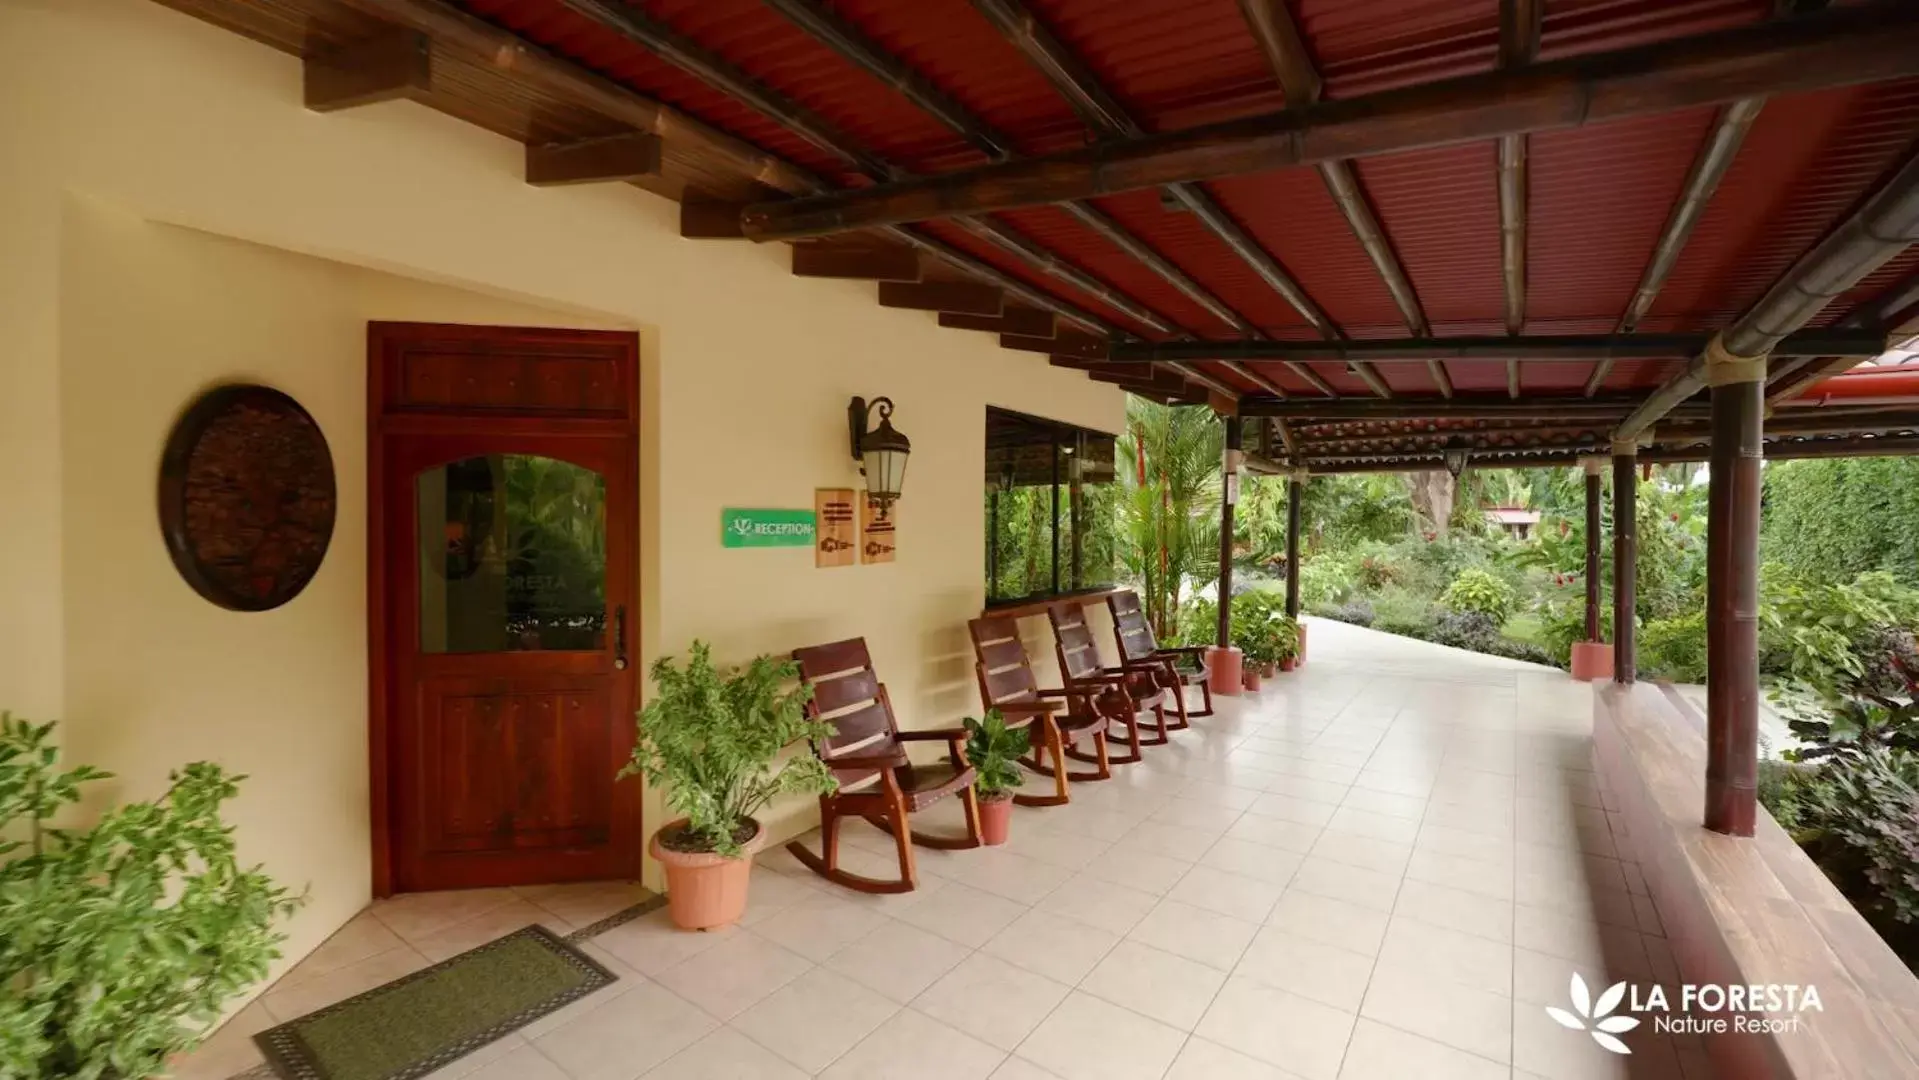 Lobby or reception, Patio/Outdoor Area in La Foresta Nature Resort